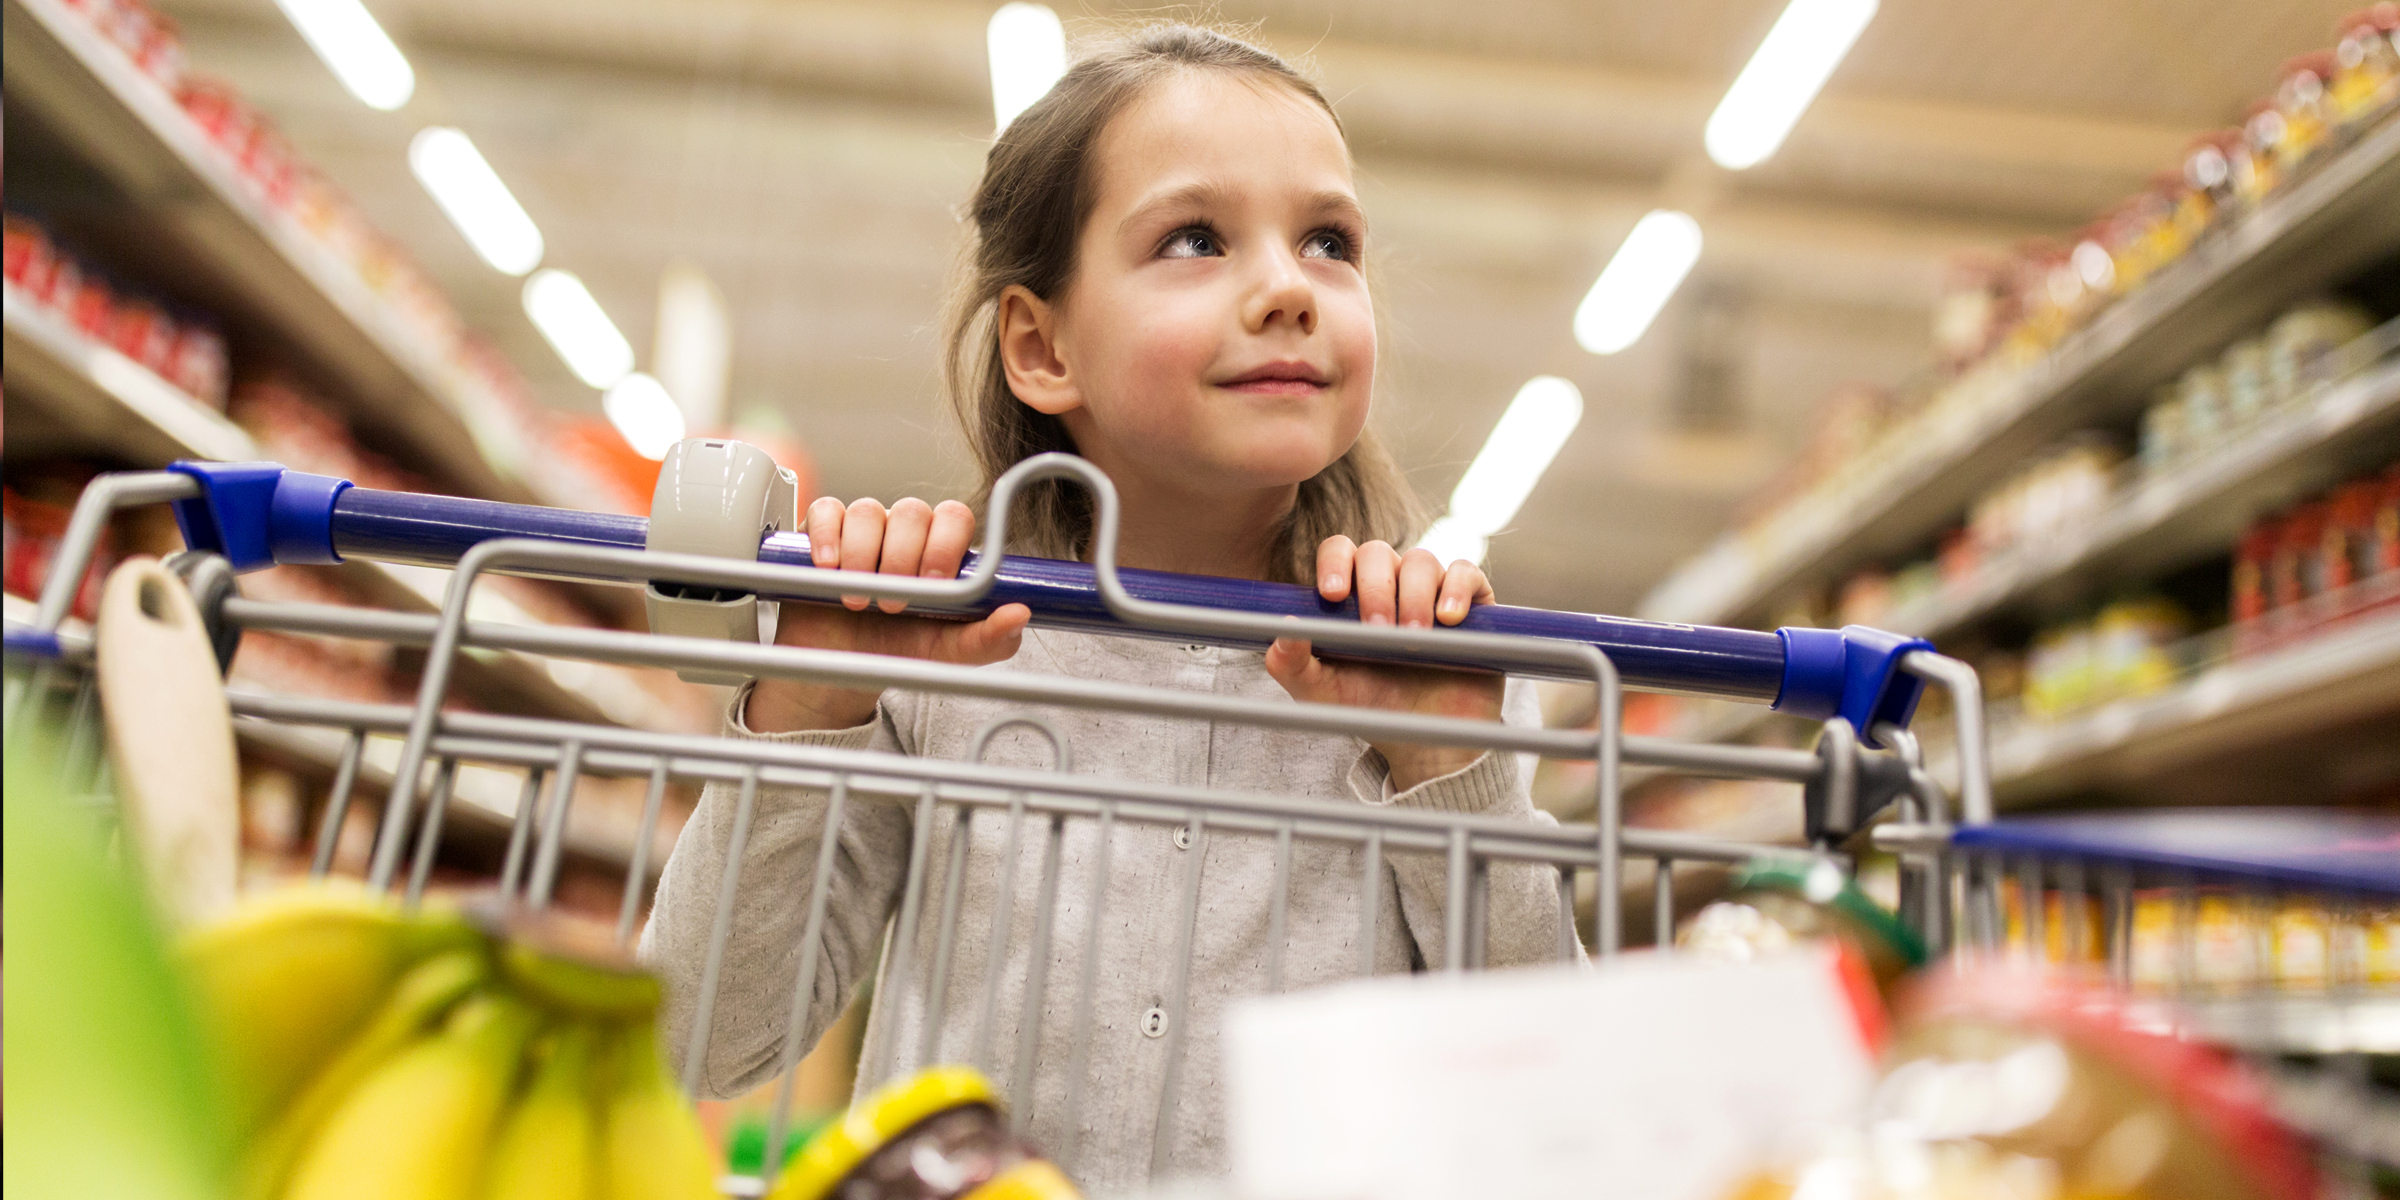 A little girl pushing a shopping cart | Source: Shutterstock